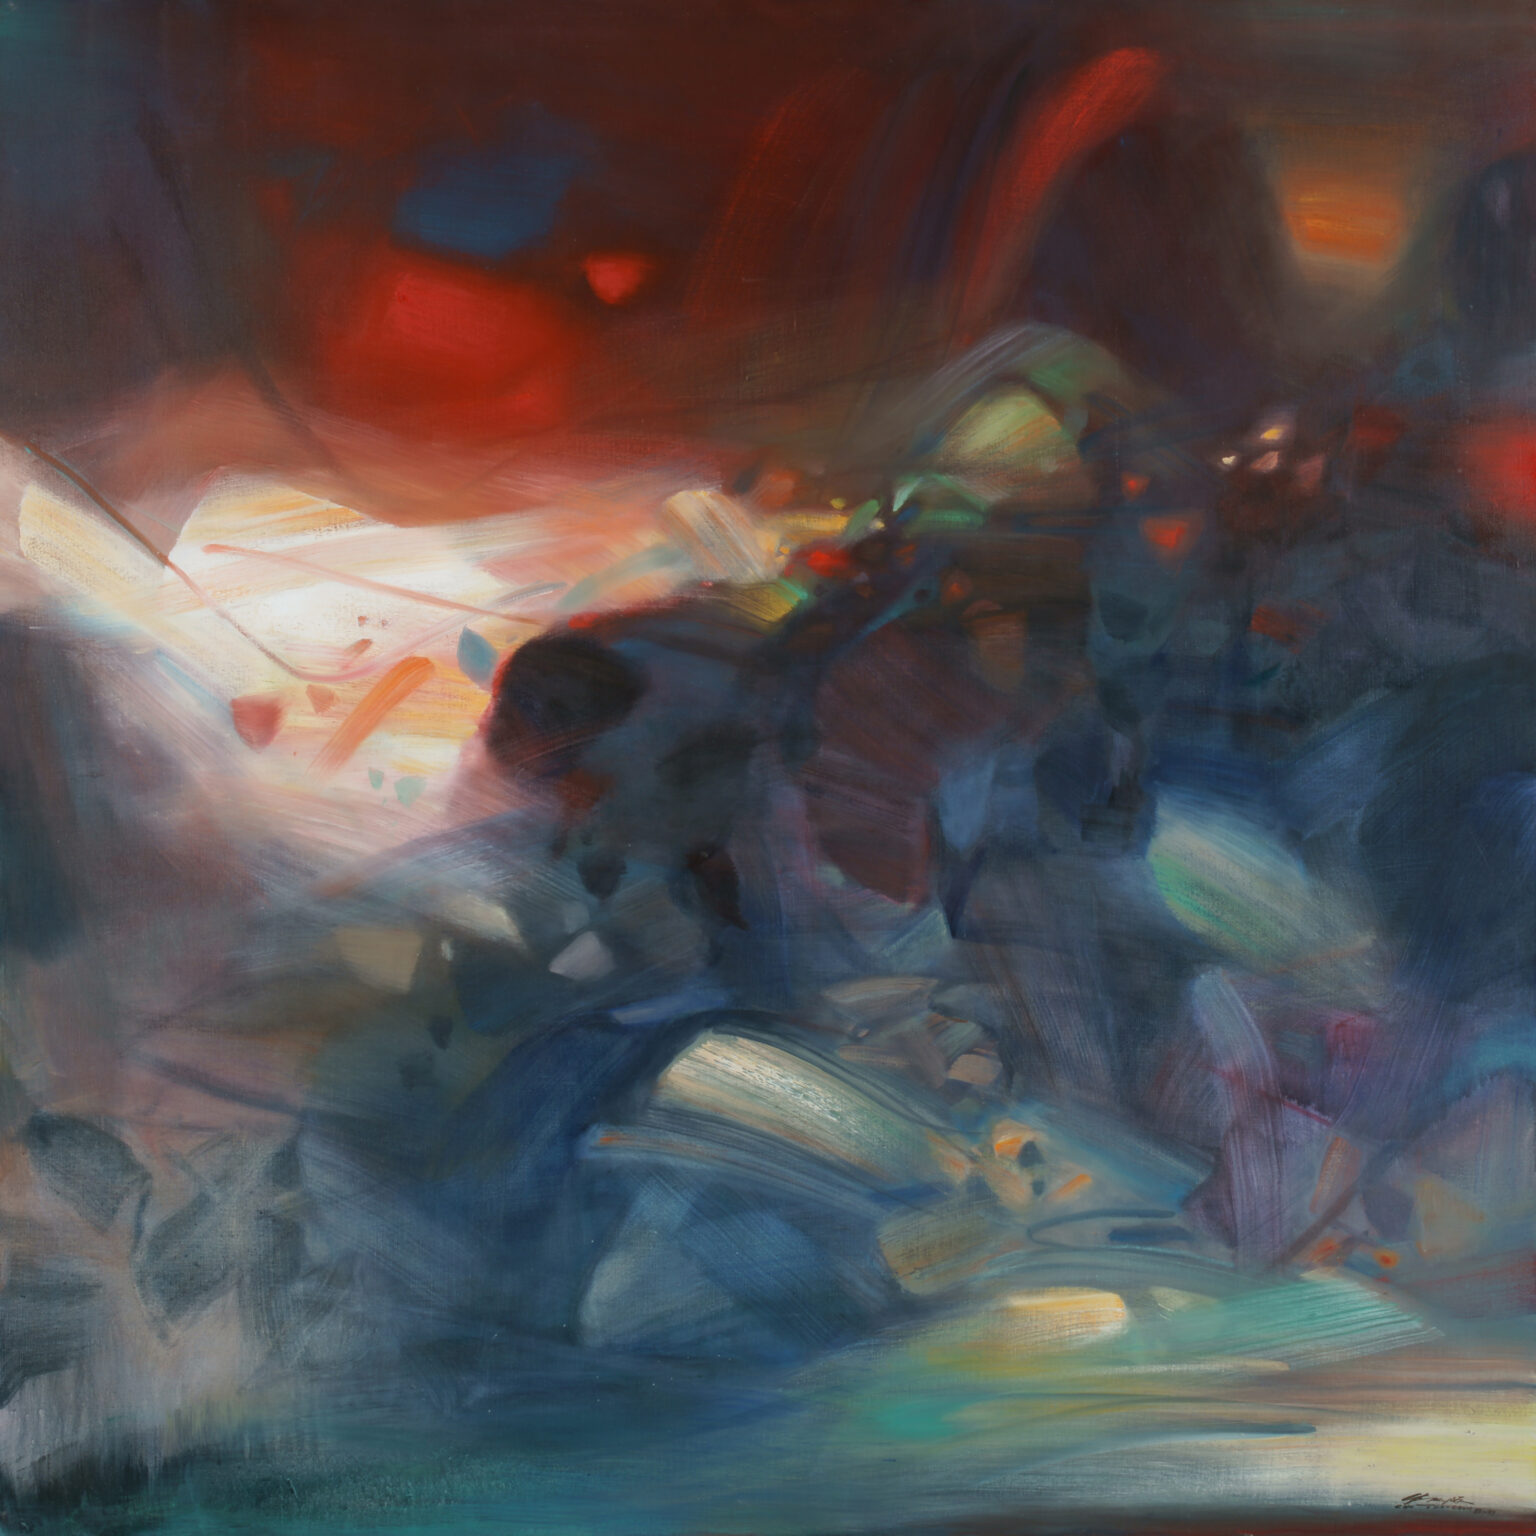 In Nebula: le nuvole di colore immaginifiche di Chu Teh-Chun a Venezia